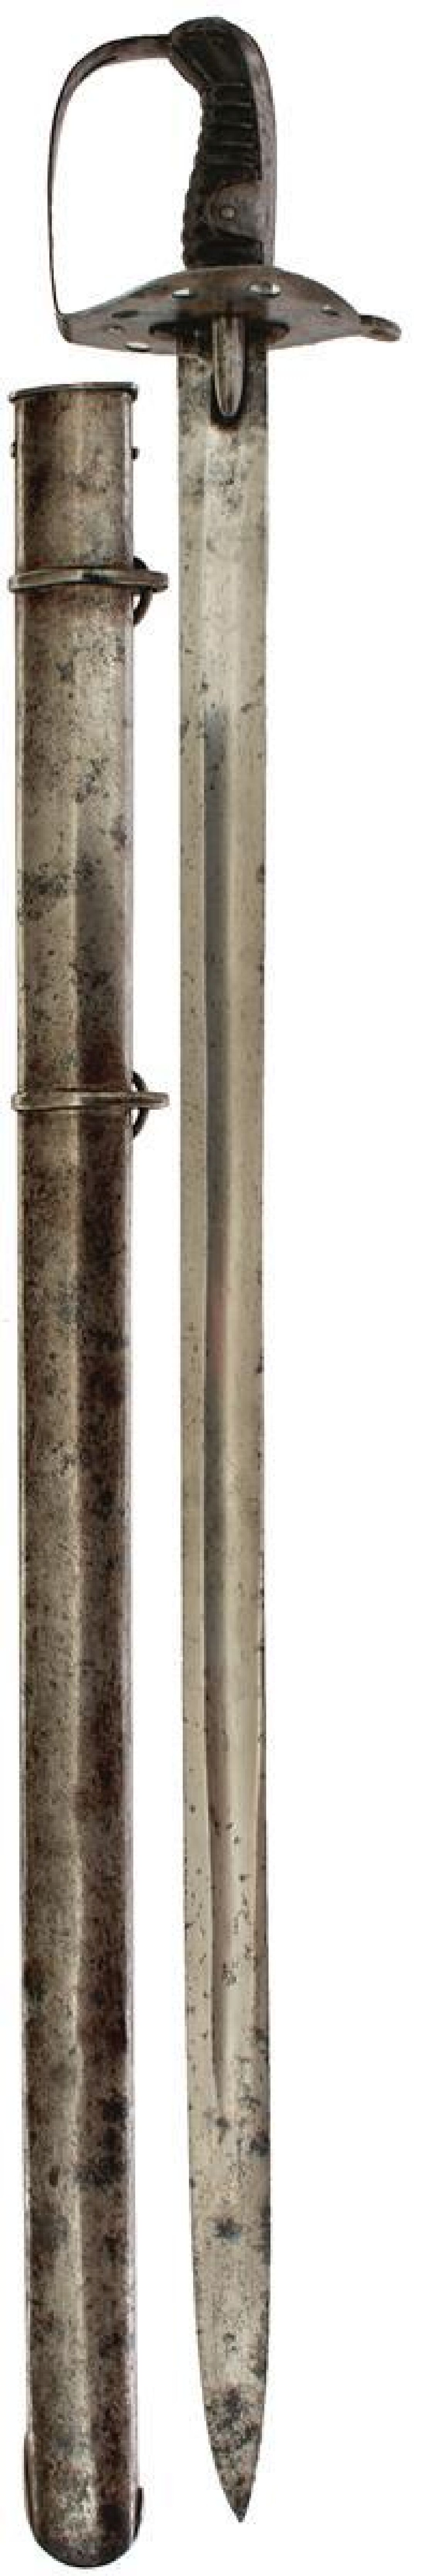 A 1796 PATTERN HEAVY CAVALRY TROOPER'S SWORD, 88cm blade with spear point, regulation steel hilt